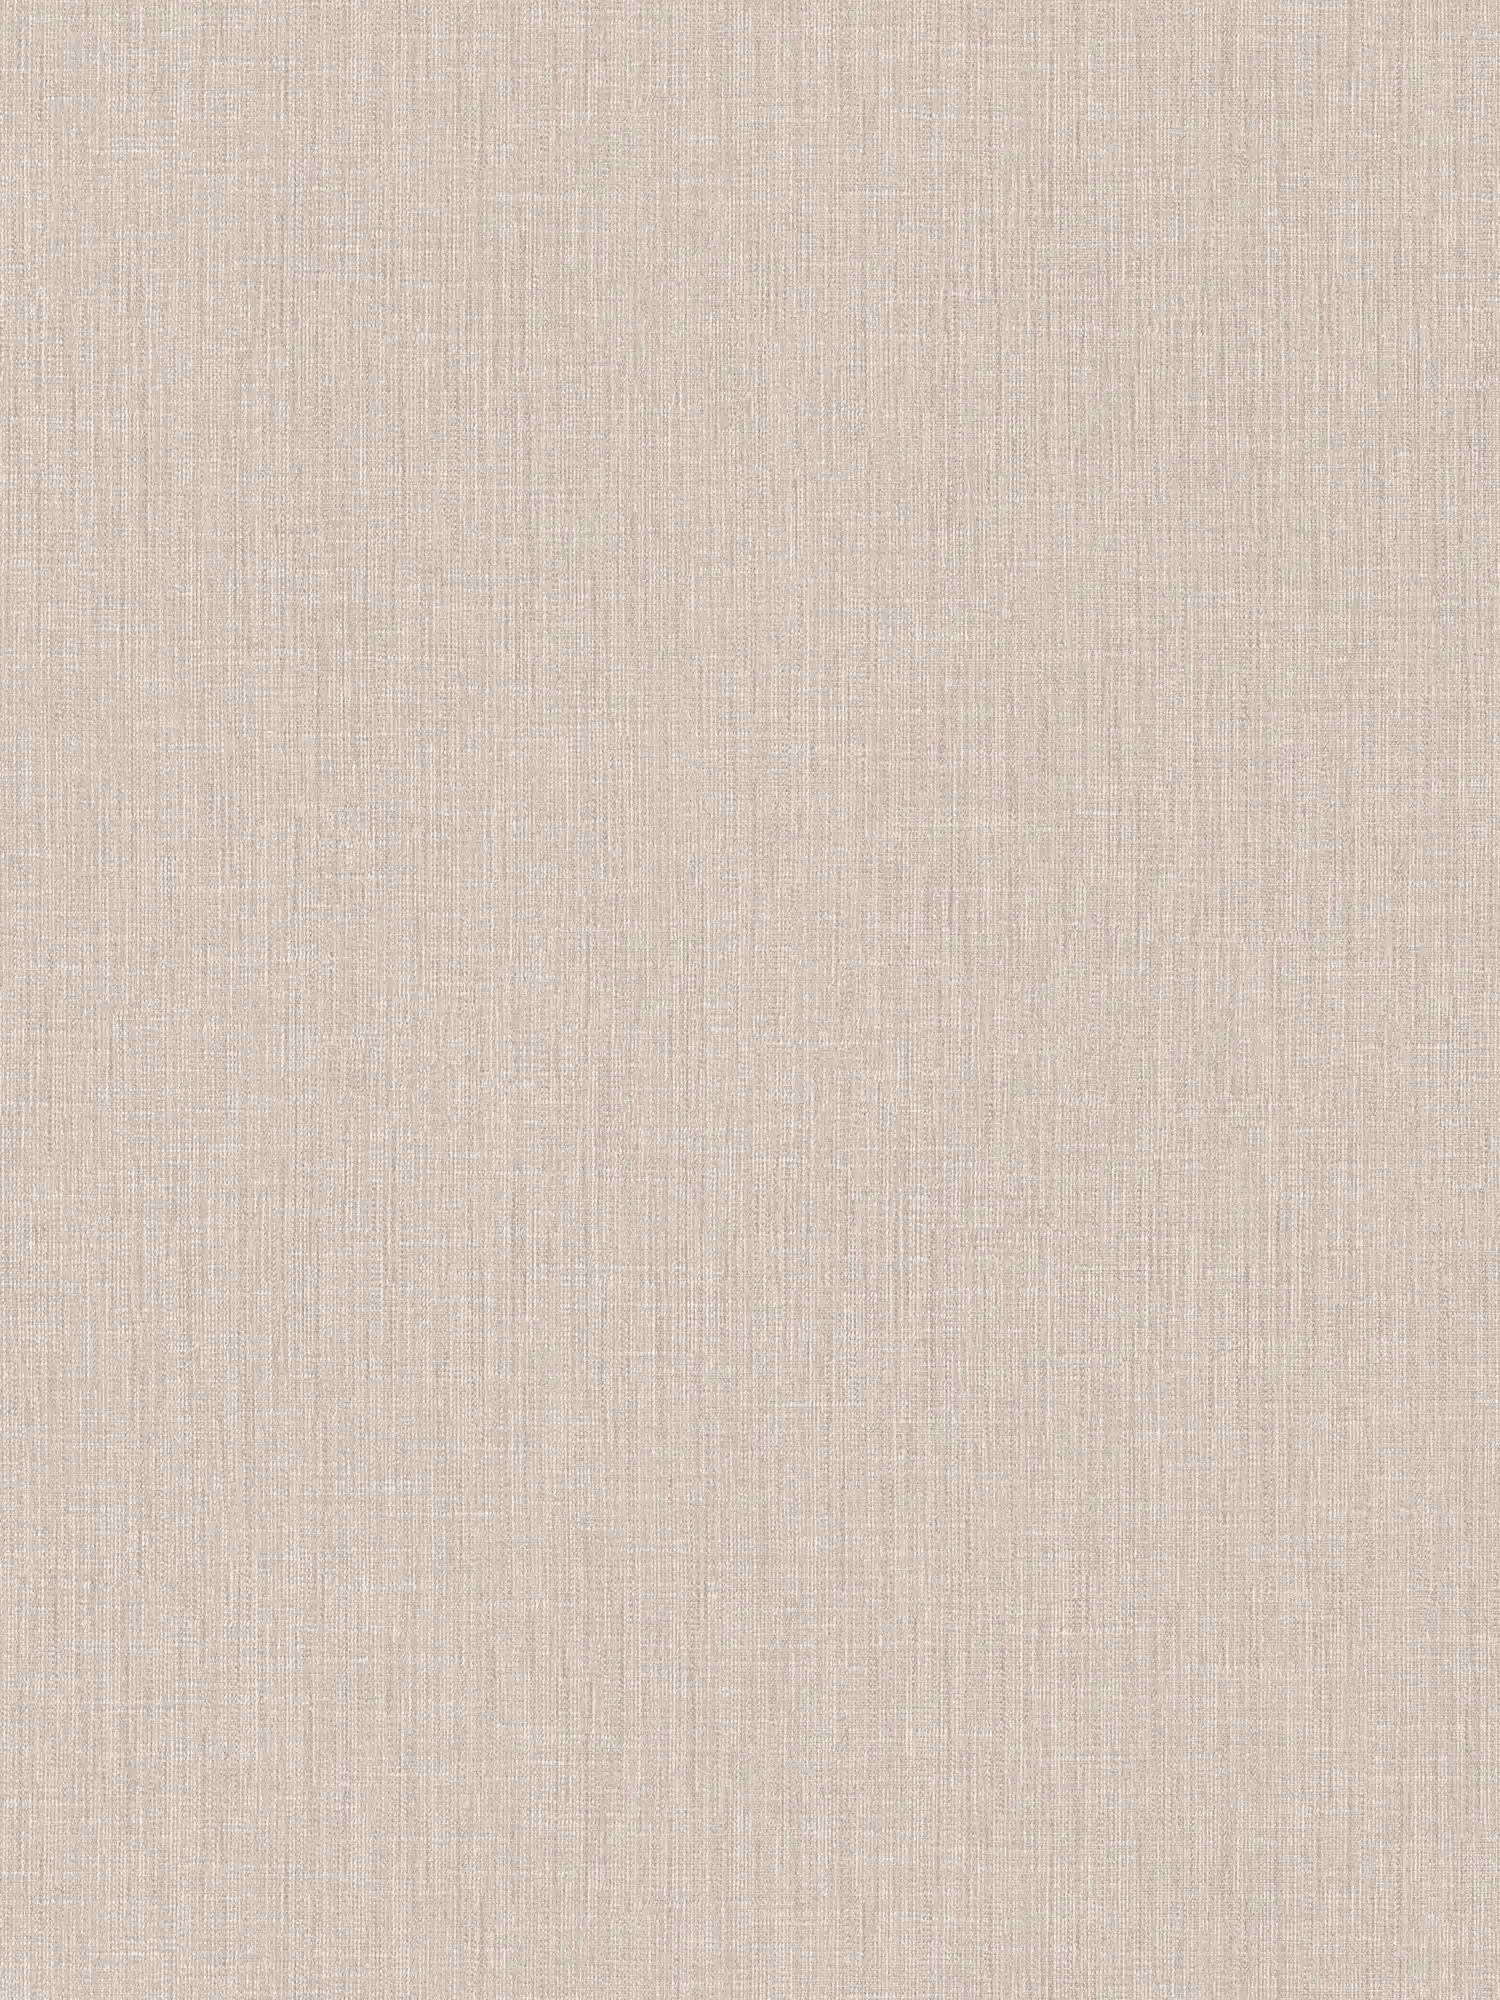 Non-woven wallpaper fabric look, mottled - beige, cream, white
